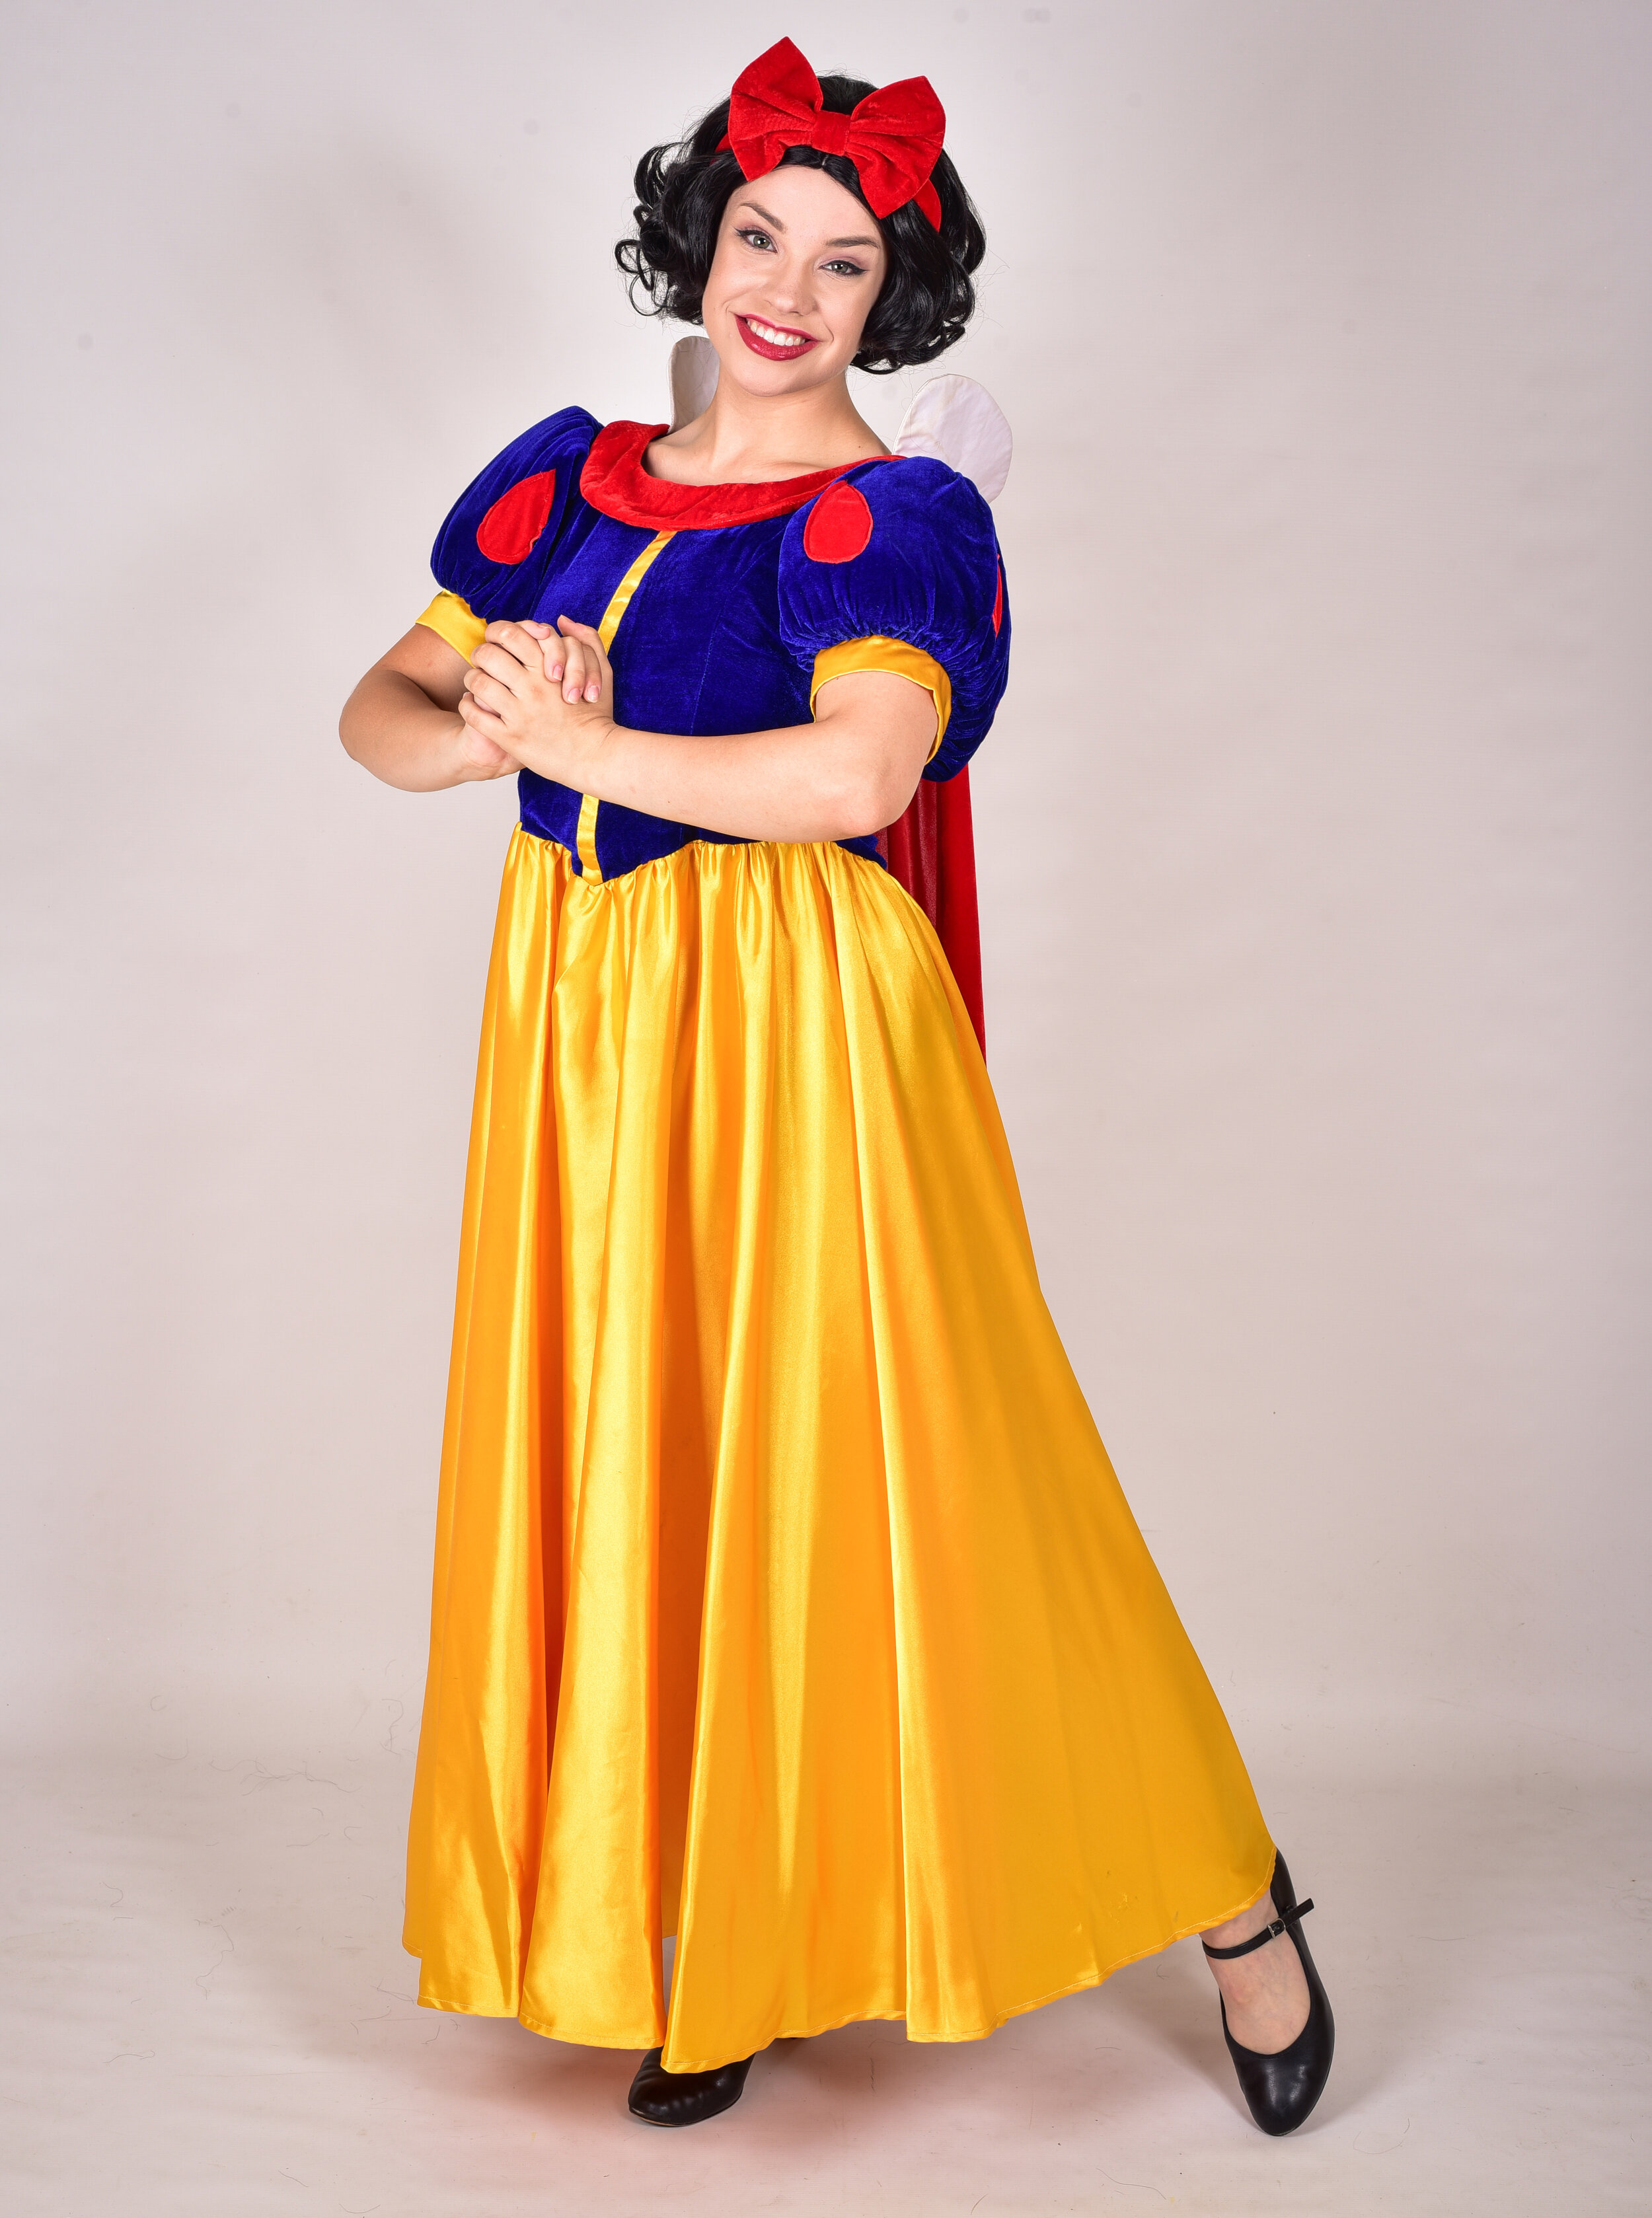 Snow White disney princess performer at event